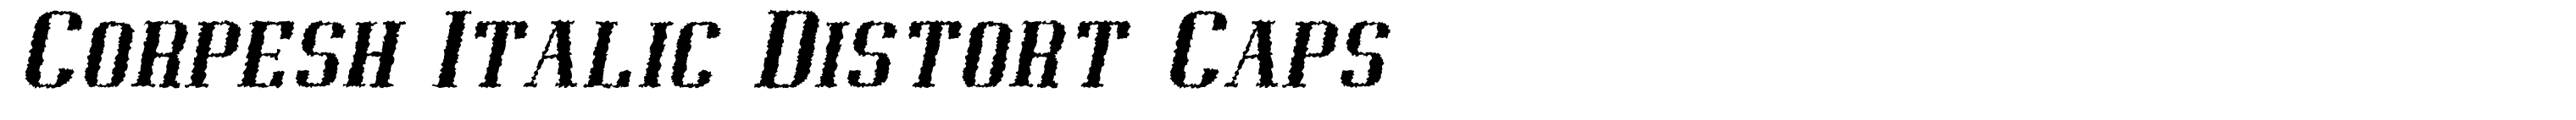 Corpesh Italic Distort Caps